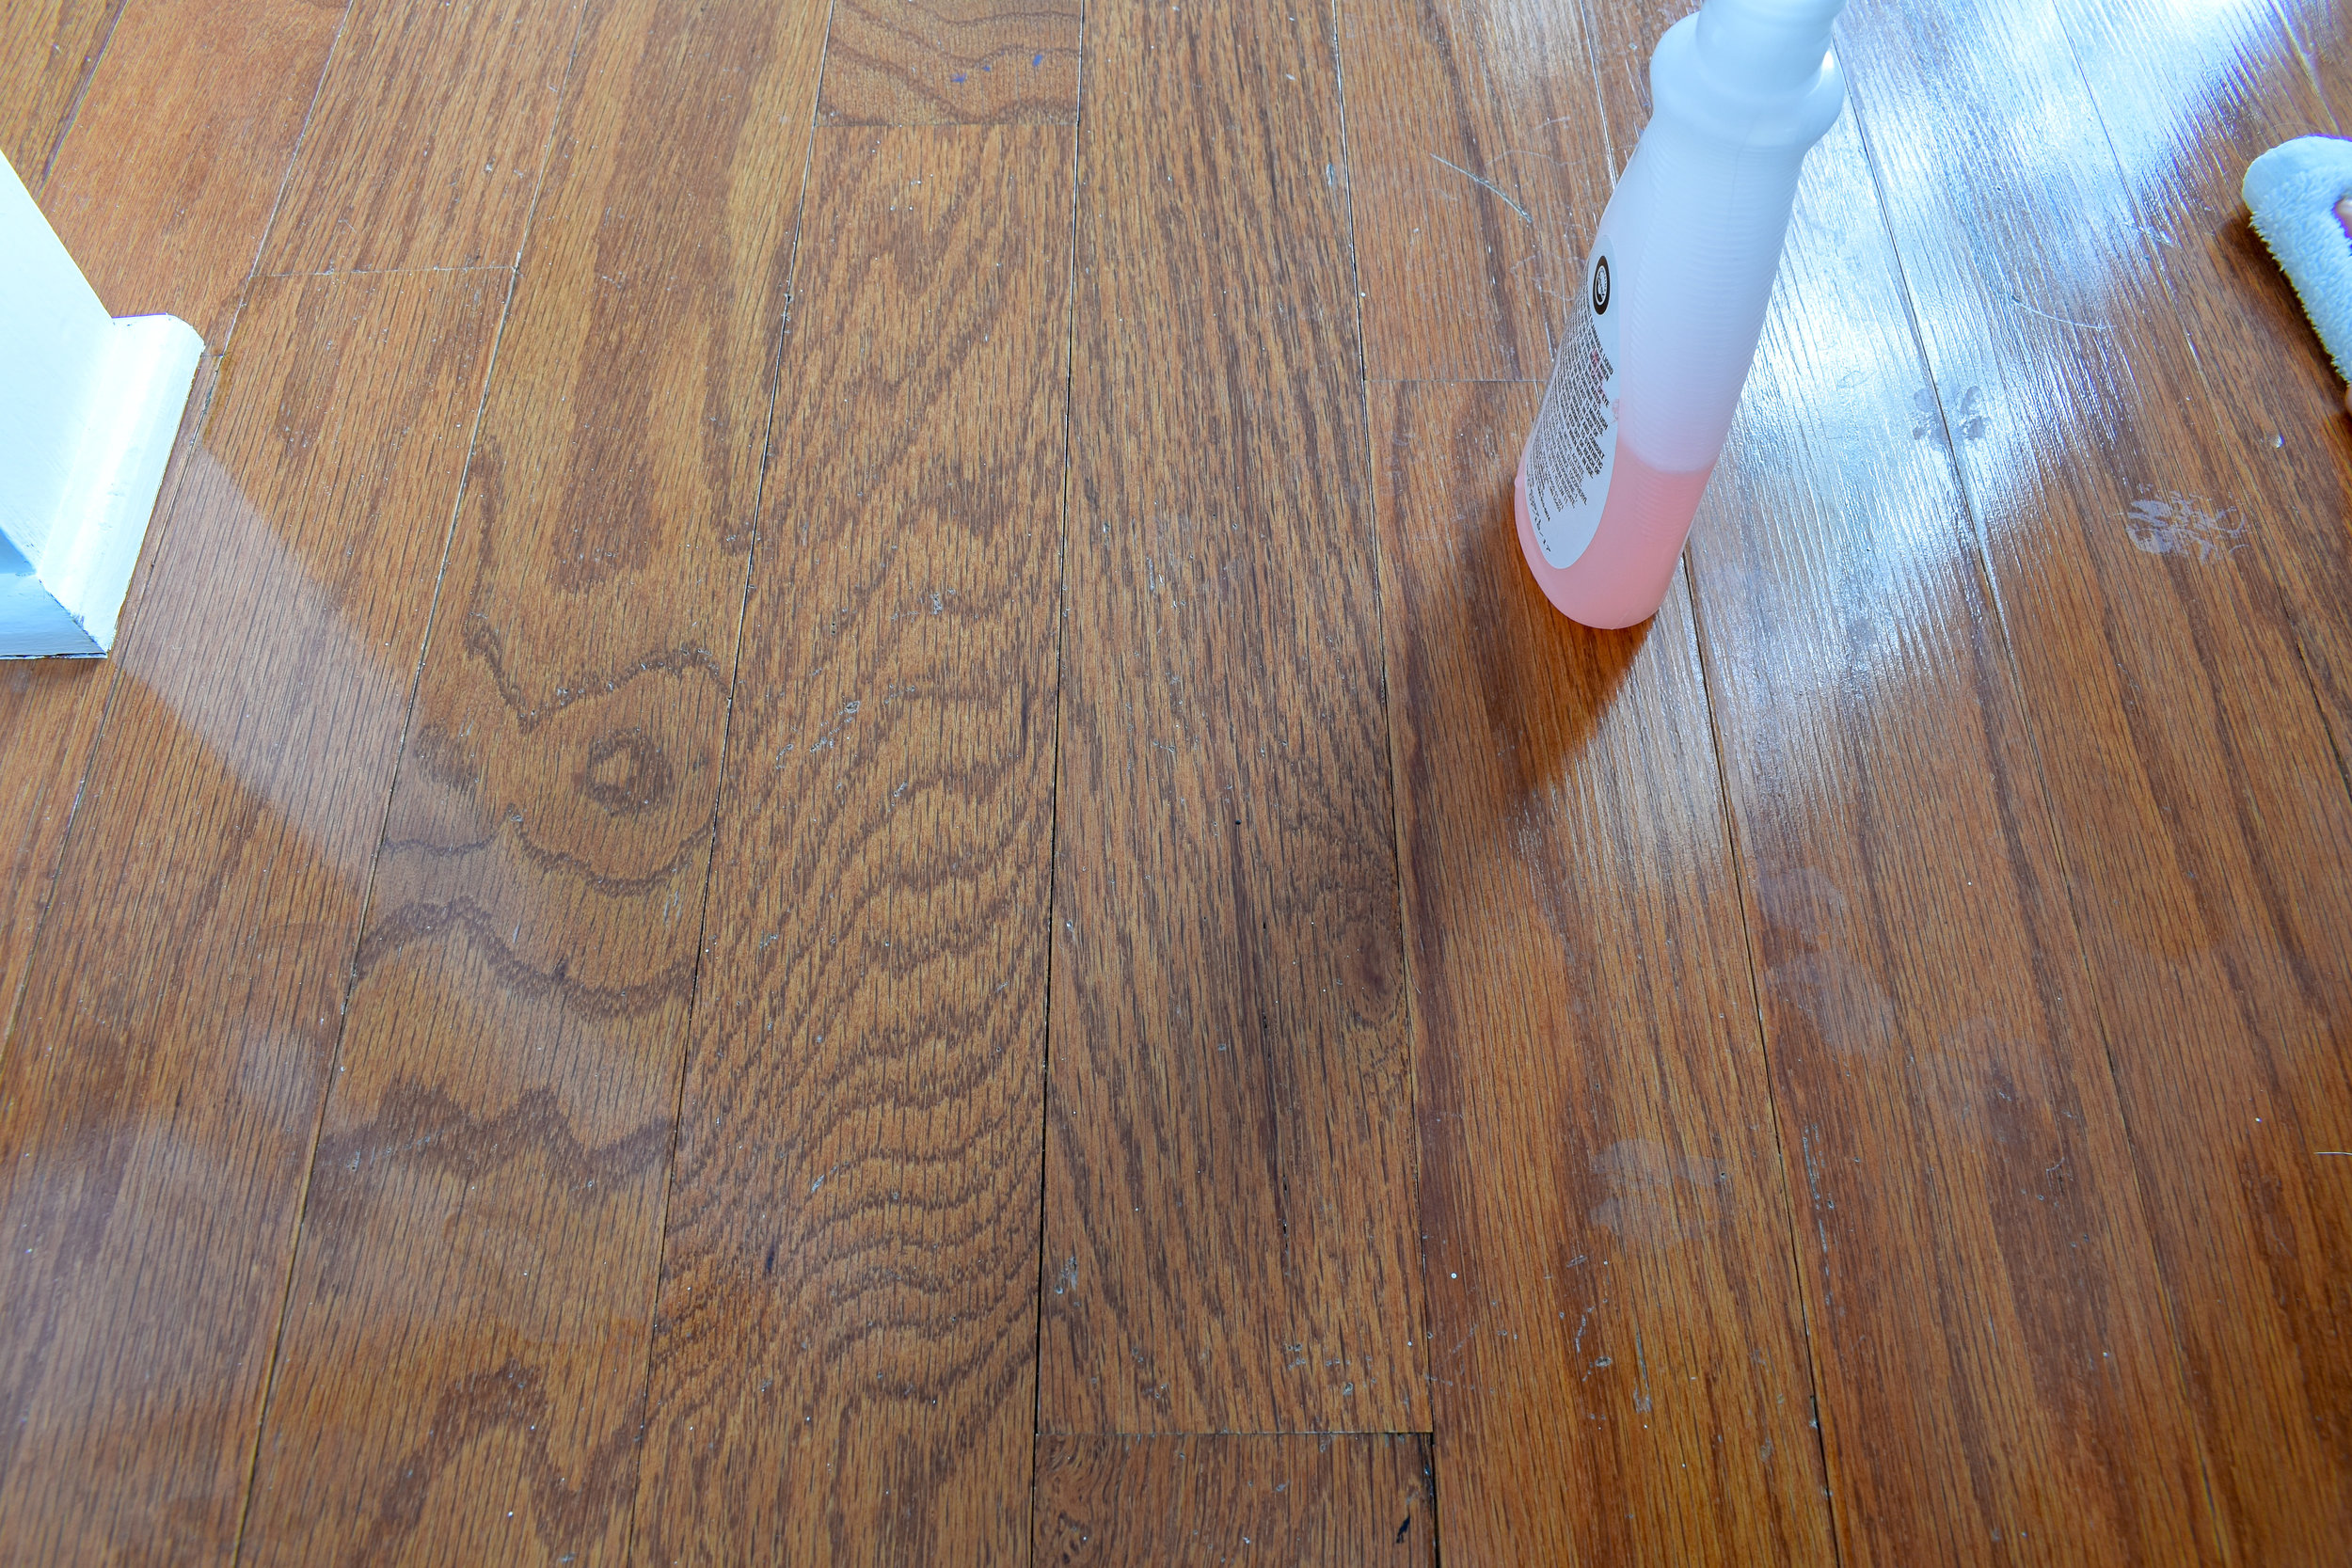 How To Make Old Hardwood Floors Shine, Shine Hardwood Floors Naturally